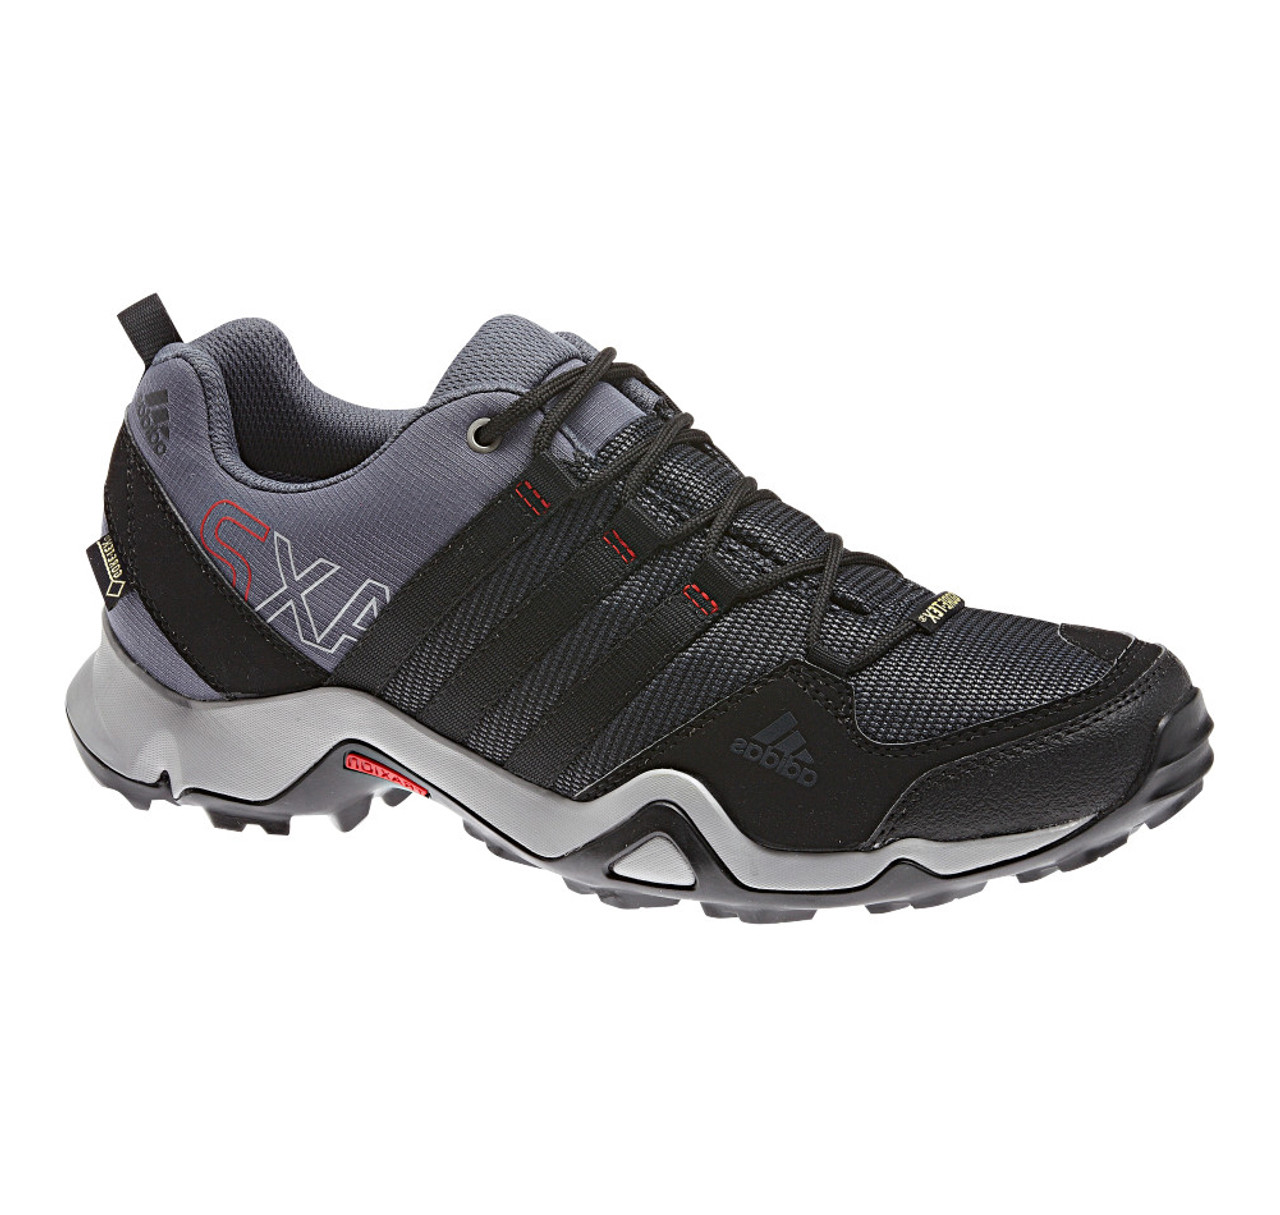 sikkert Spiritus video Adidas Men's Ax 2 GTX Hiking Shoe - Black | Discount Adidas Men's Athletic  Shoes & More - Shoolu.com | Shoolu.com